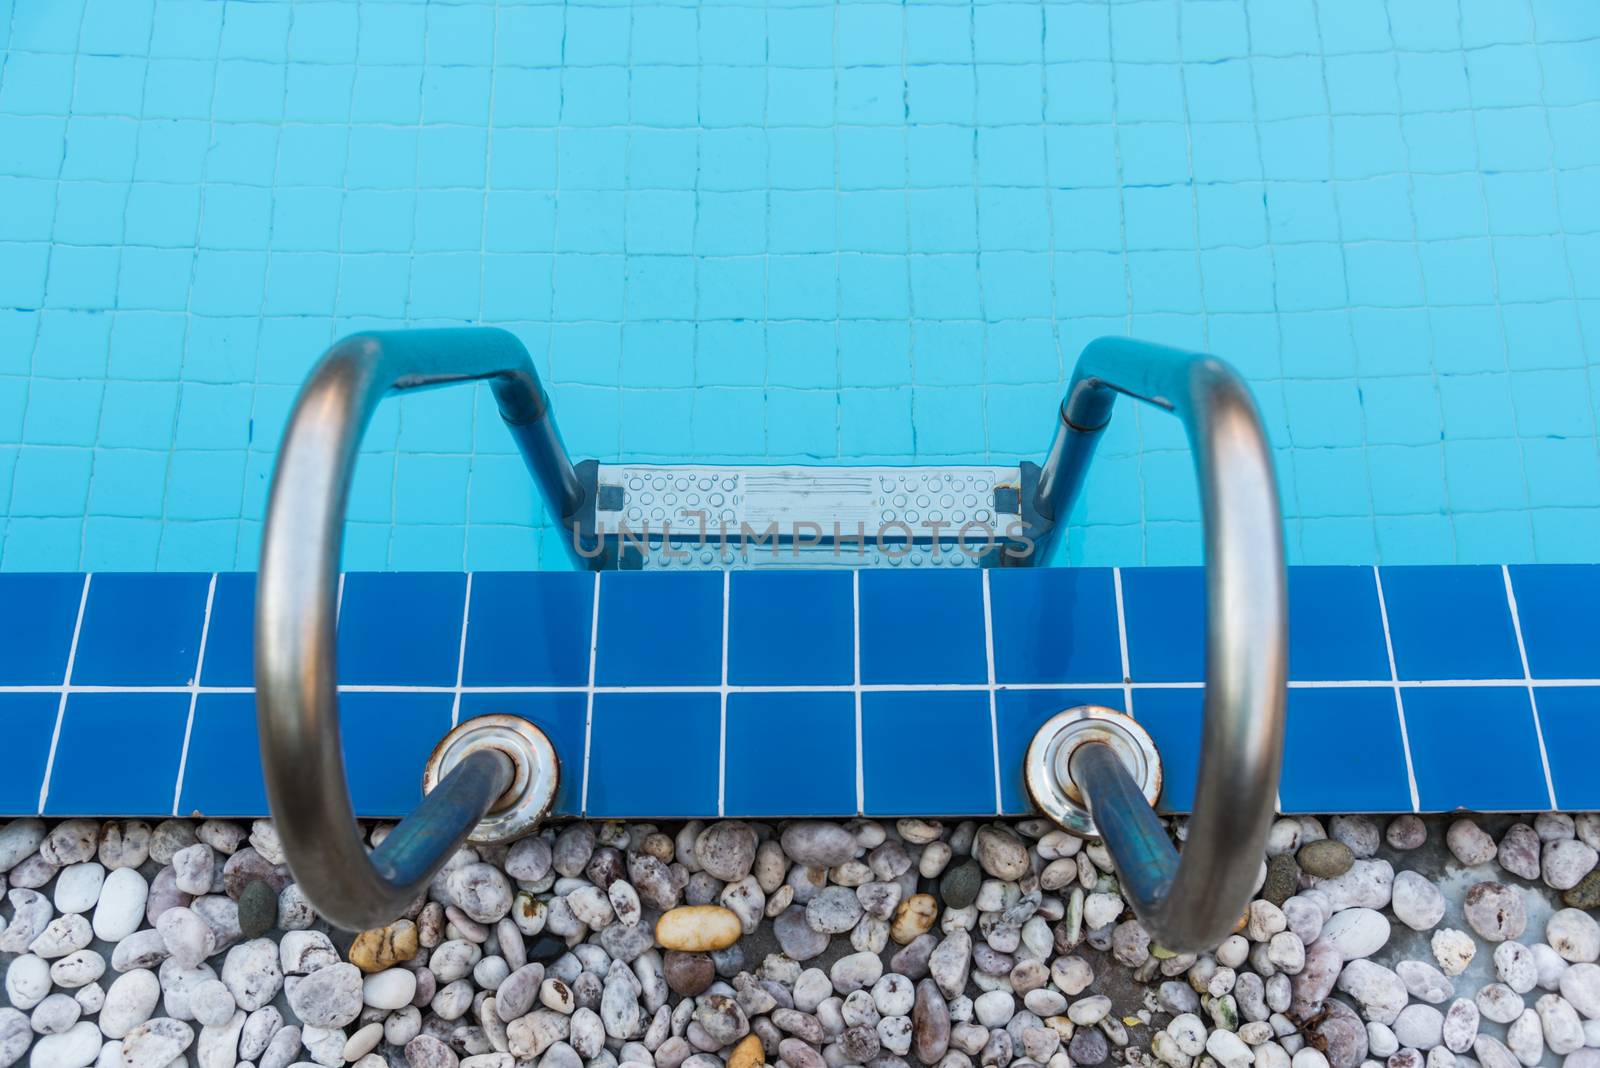 Hotel blue swimming pool by Sorapop